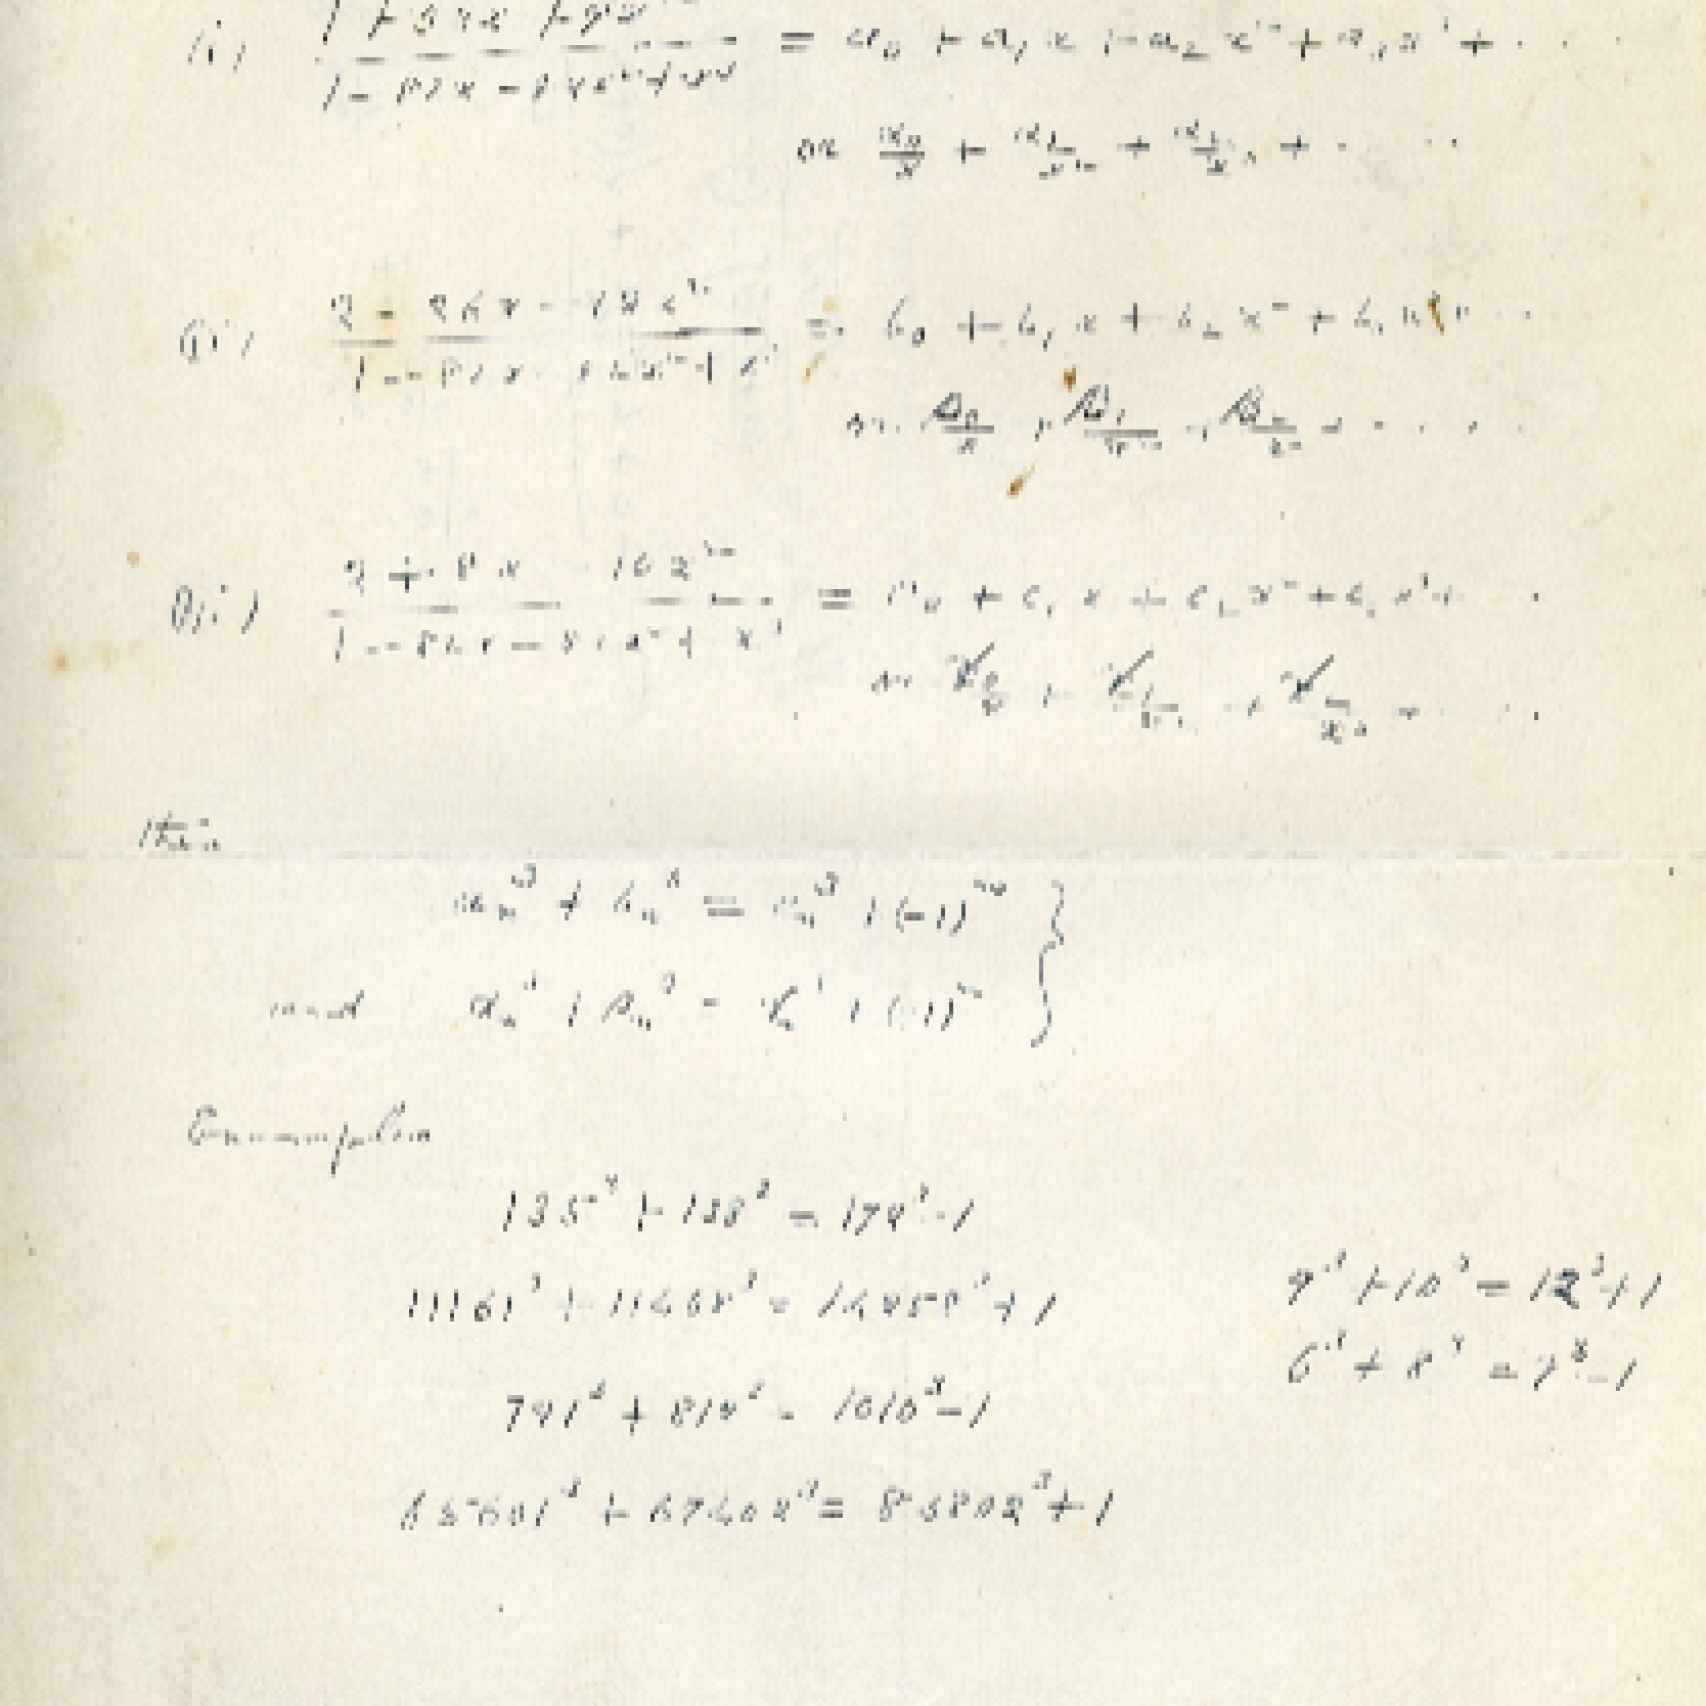 Un ejemplo del trabajo de Ramanujan